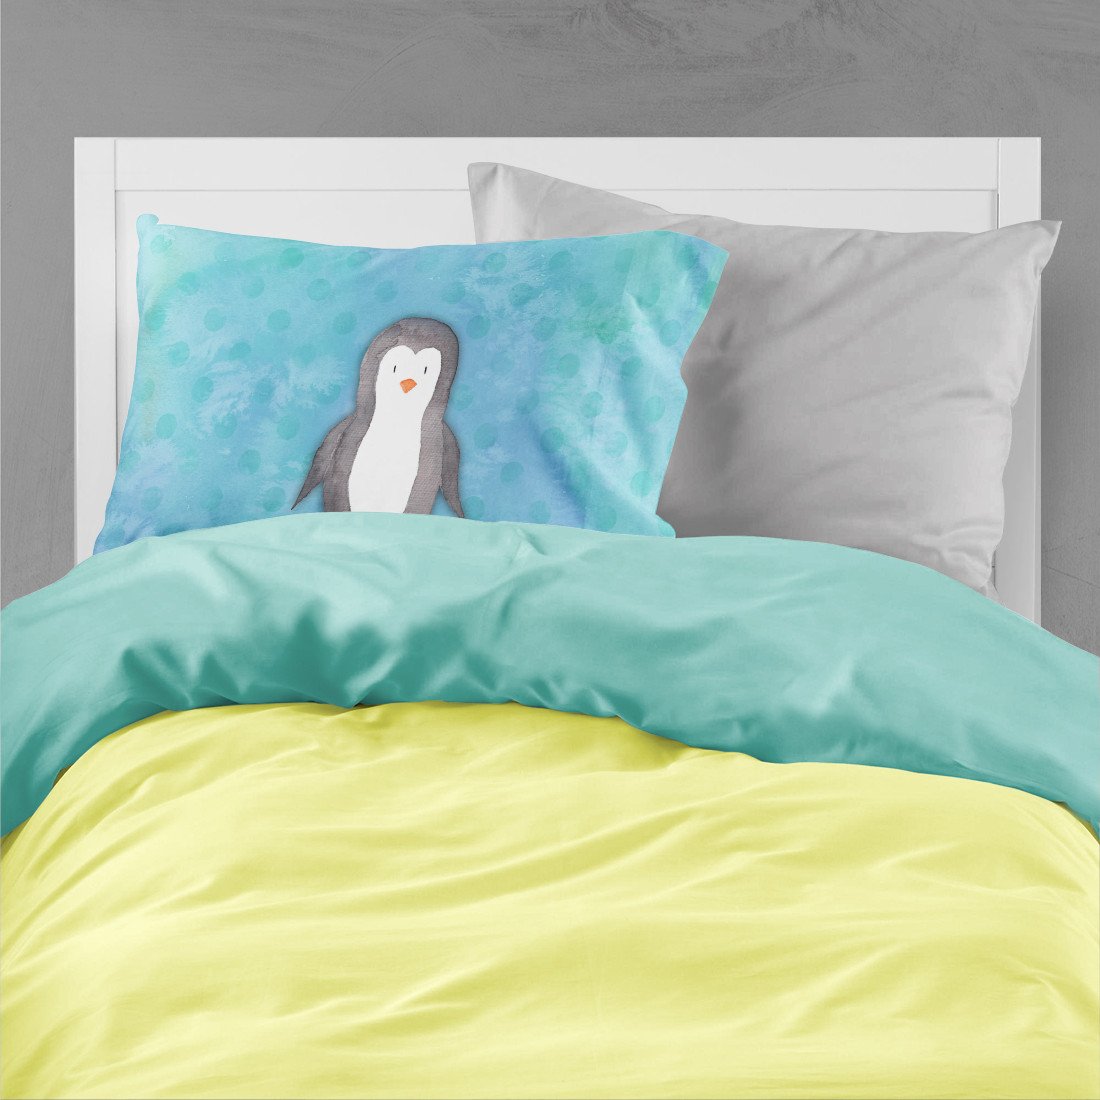 Polkadot Penguin Watercolor Fabric Standard Pillowcase BB7376PILLOWCASE by Caroline's Treasures